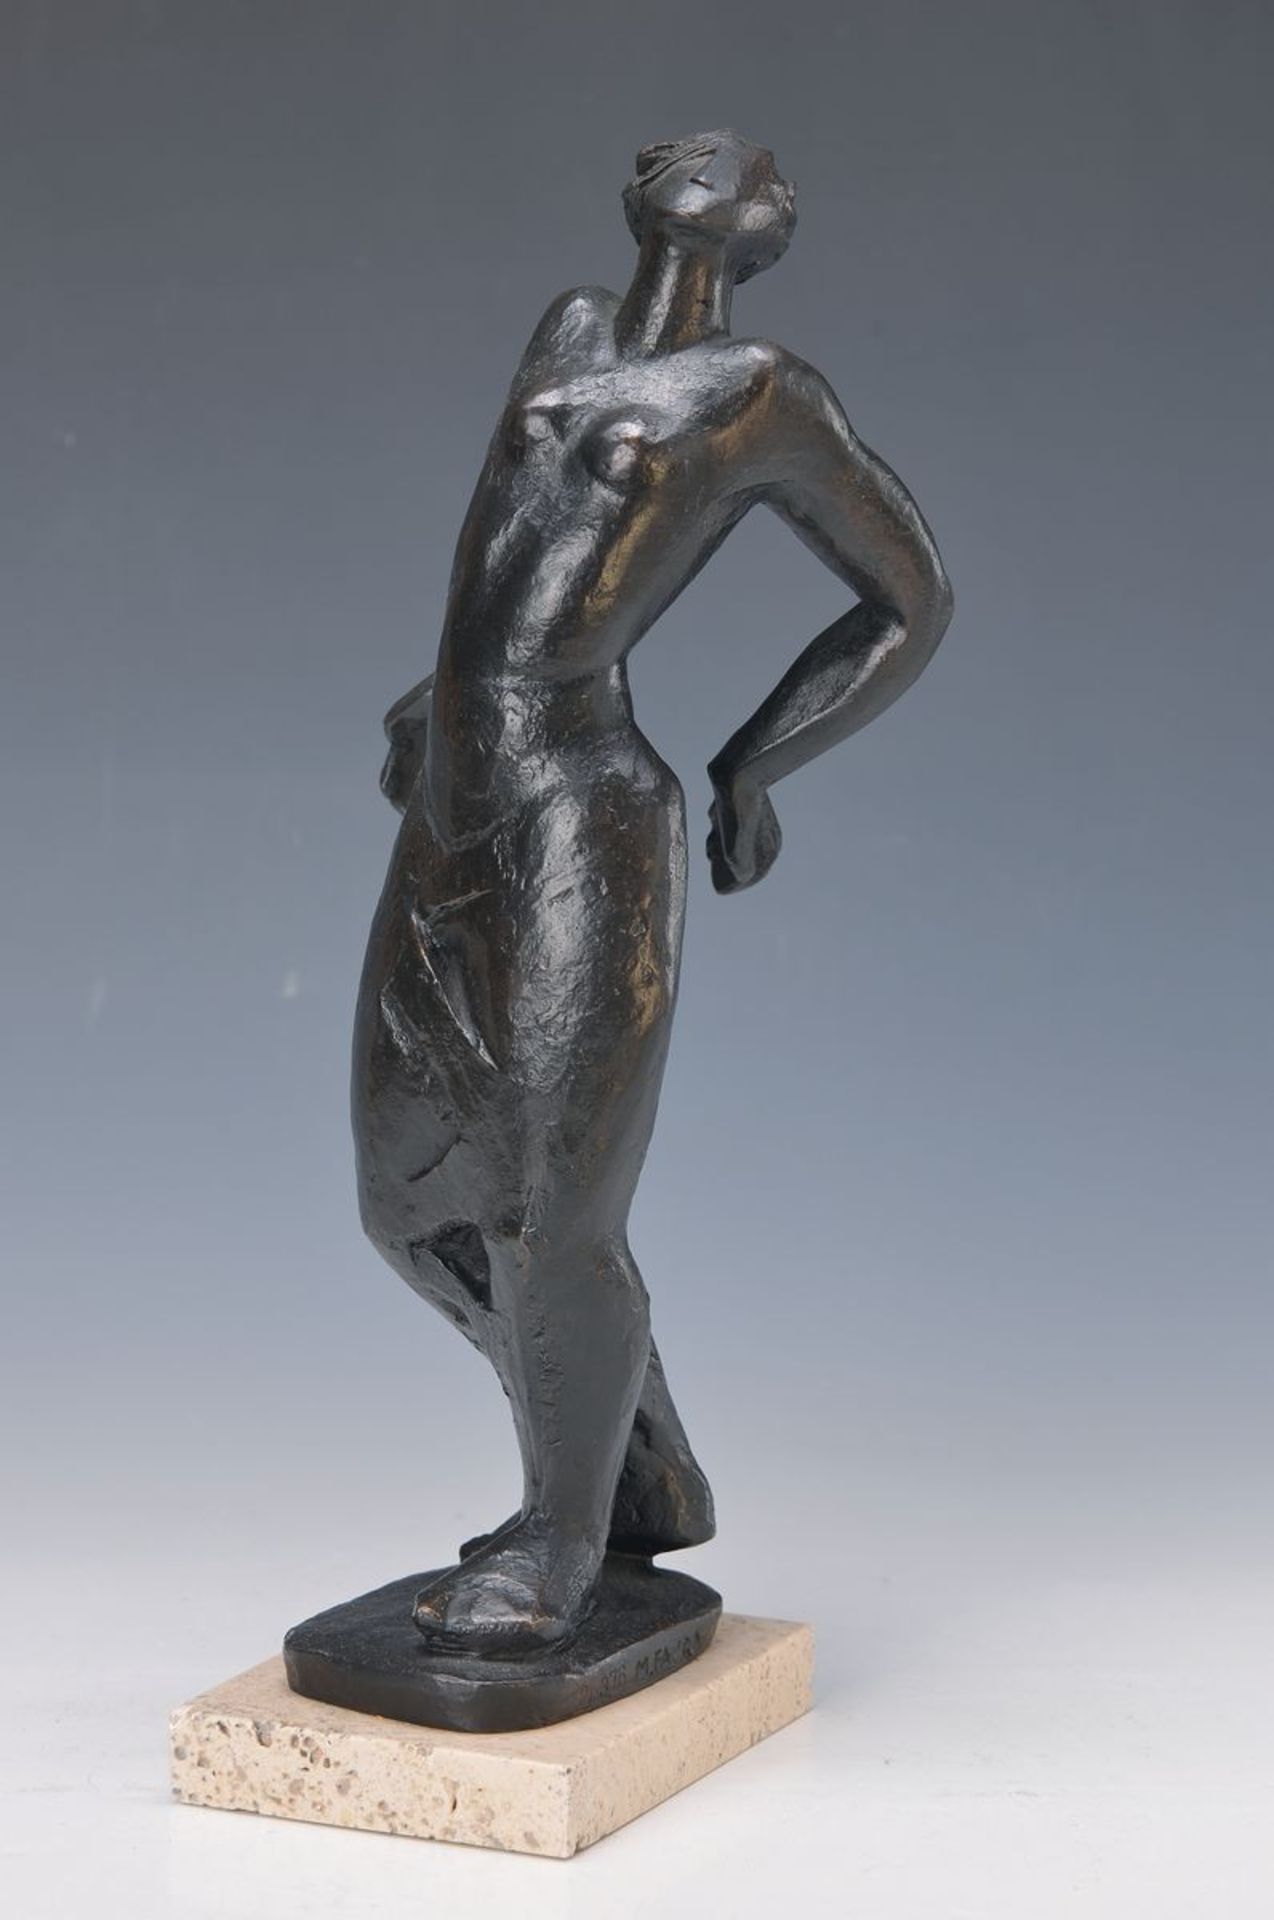 Montserra Faura, geb. 1947 Bacelona, Bronzeskulptur, nach hinten gebeugte Skulptur, "Frine" am